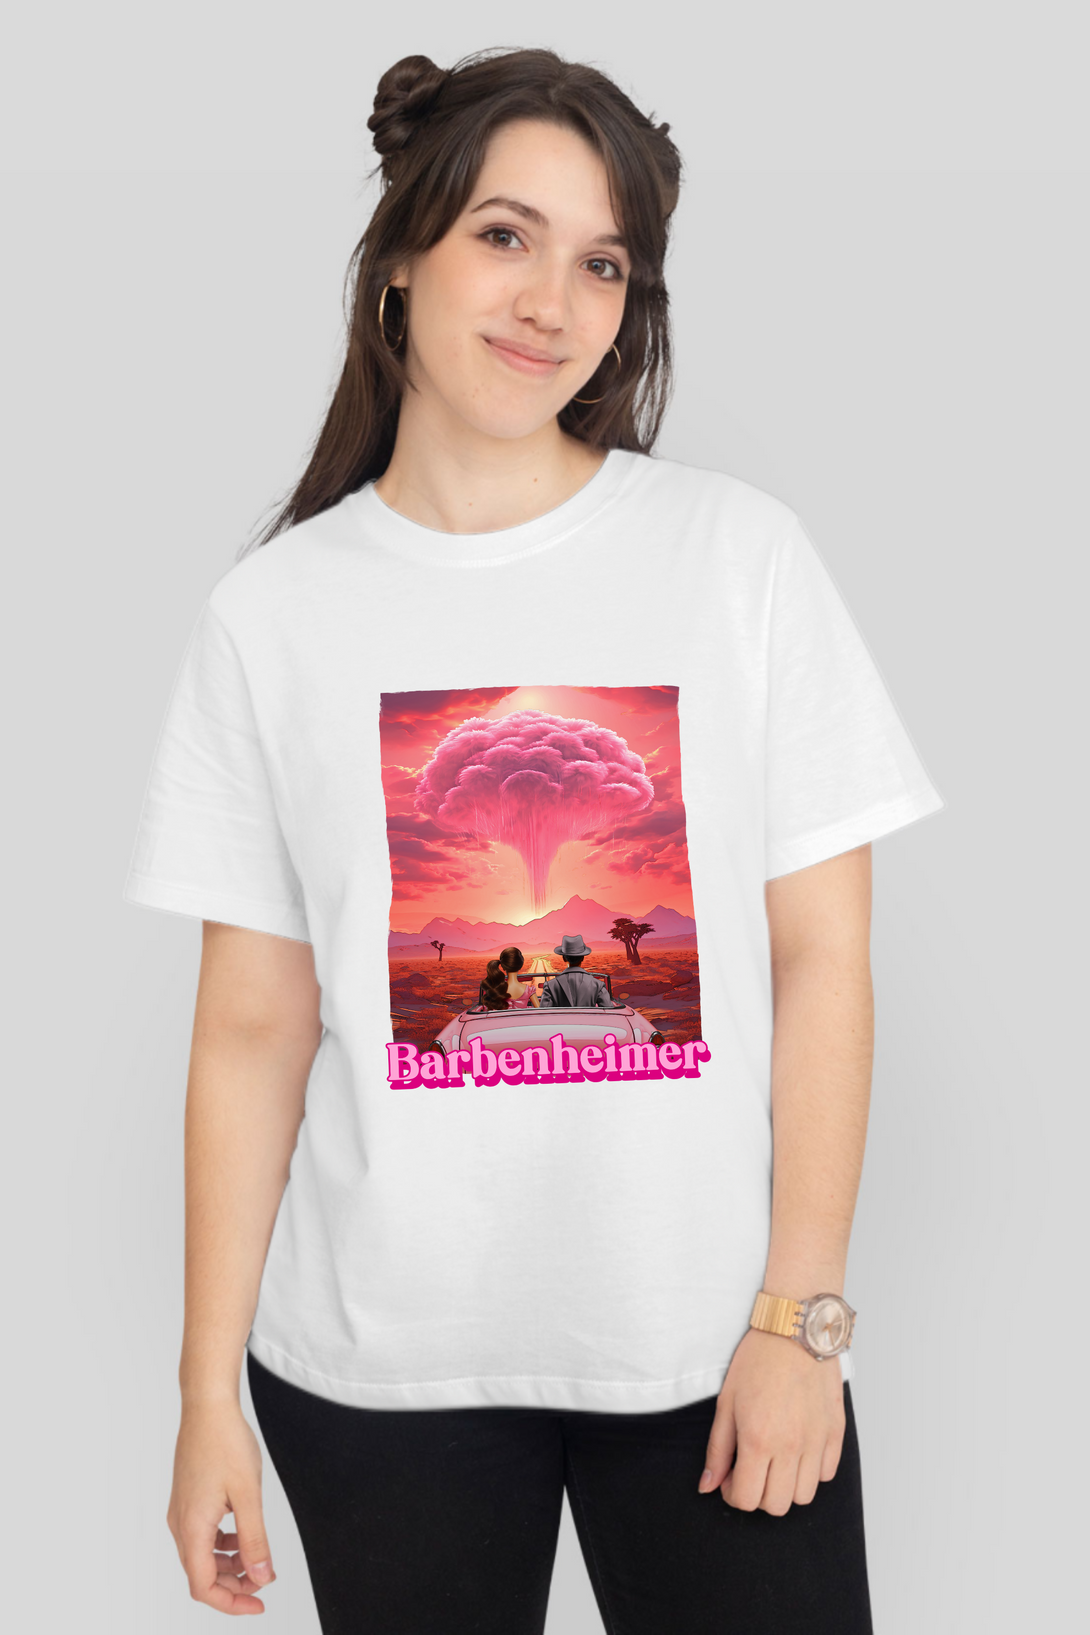 Barbienheimer Printed T-Shirt For Women - WowWaves - 6